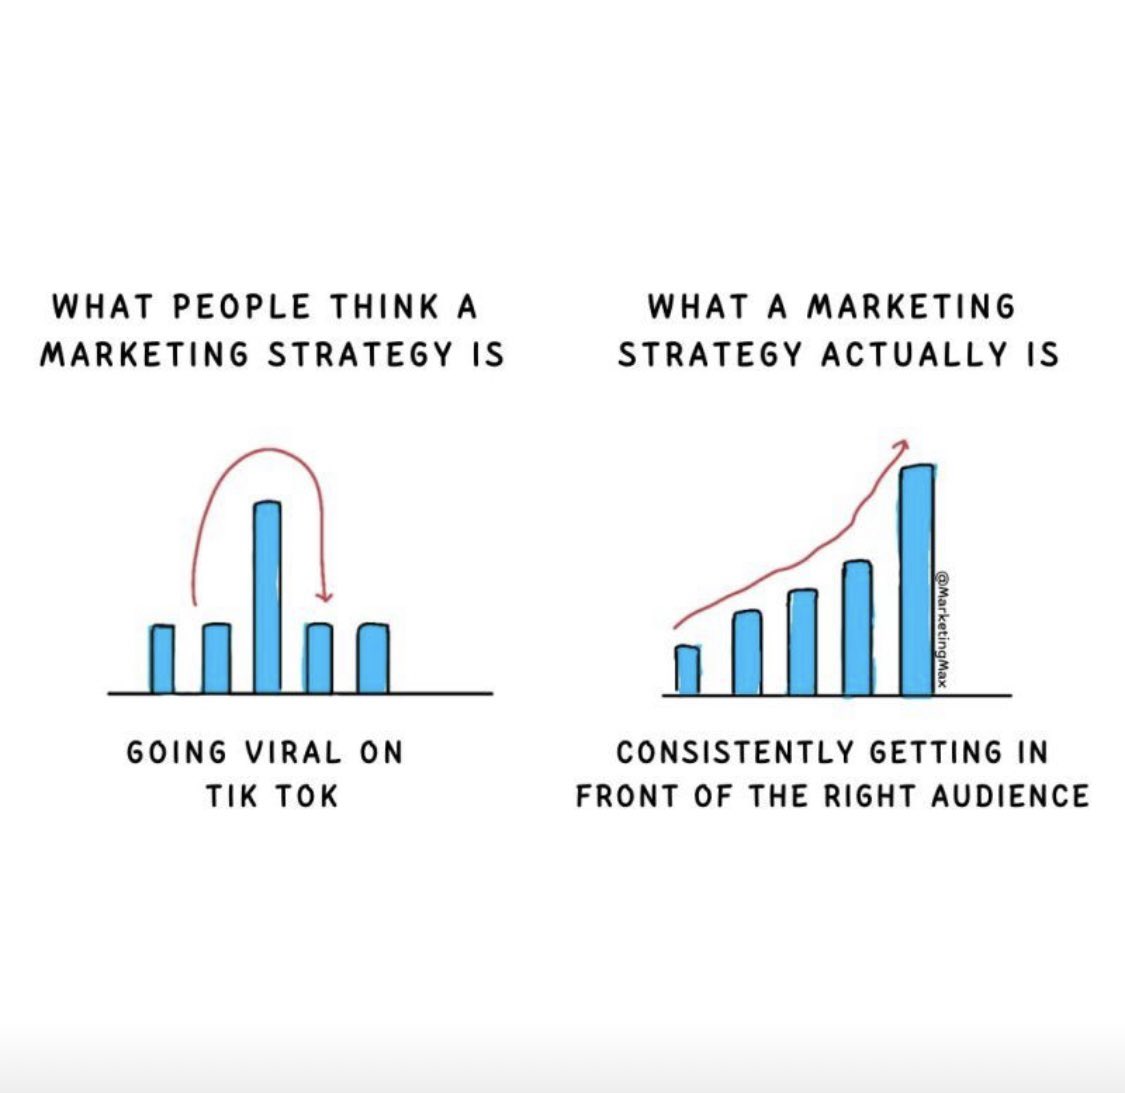 Don't get it confused!

#marketing #marketinghelp #marketingideas #marketingstrategy 

Credit: Max (Marketing Max) Binda